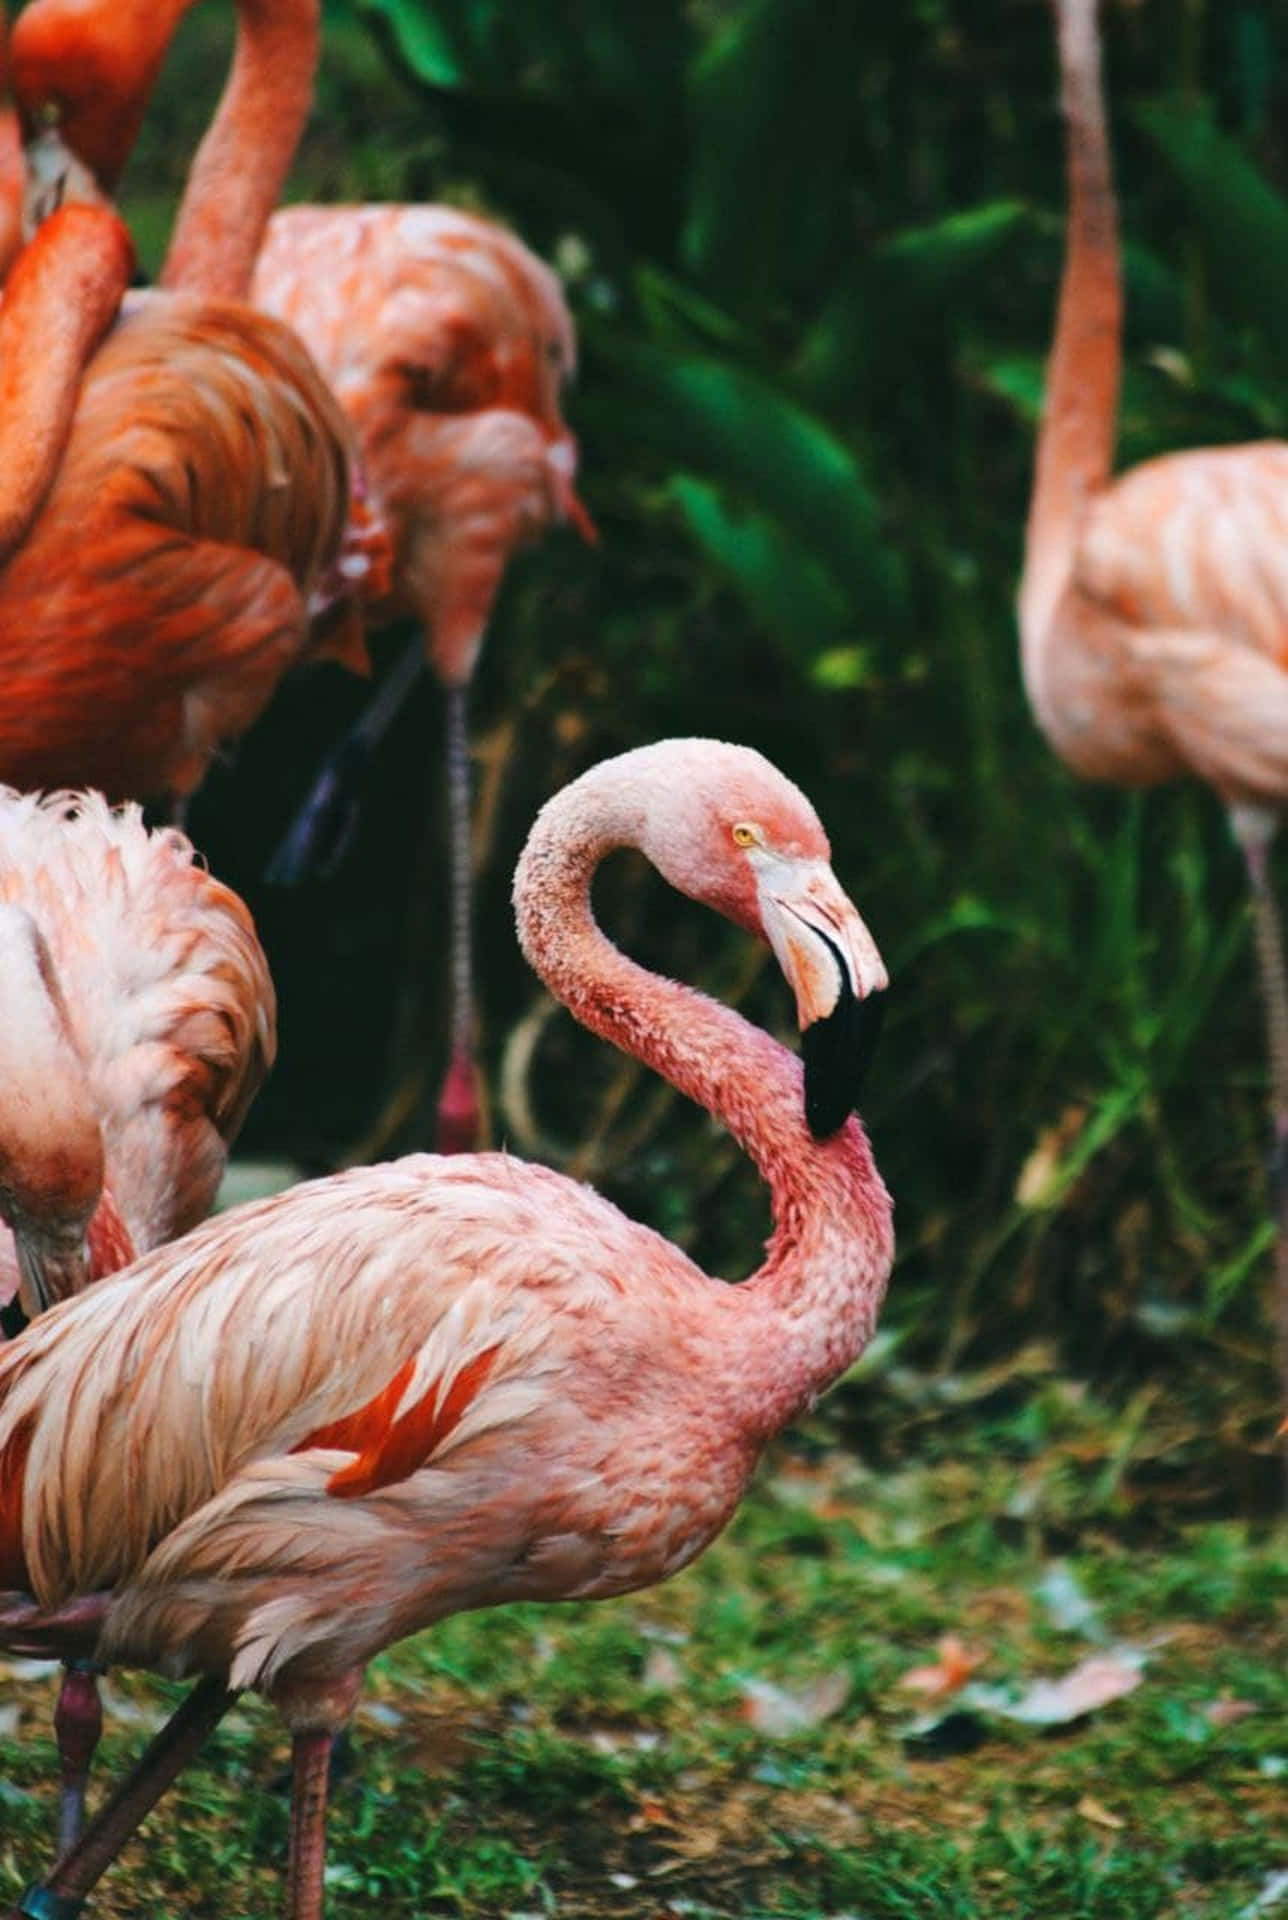 A precious moment captured between a flamingo and iPhone. Wallpaper